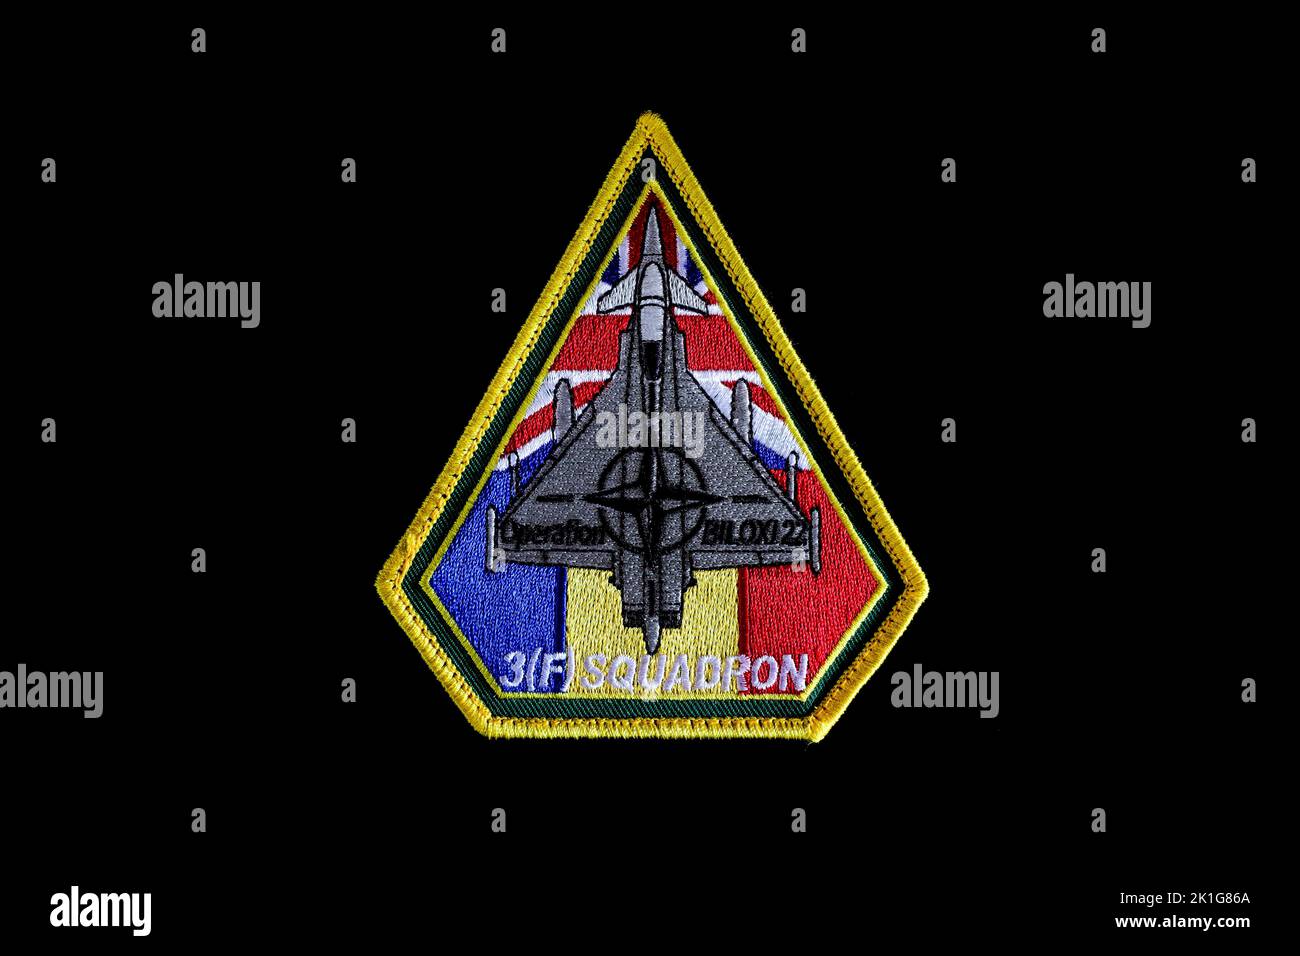 3(F) Squadron Op Biloxi 2022 Patch Stock Photo